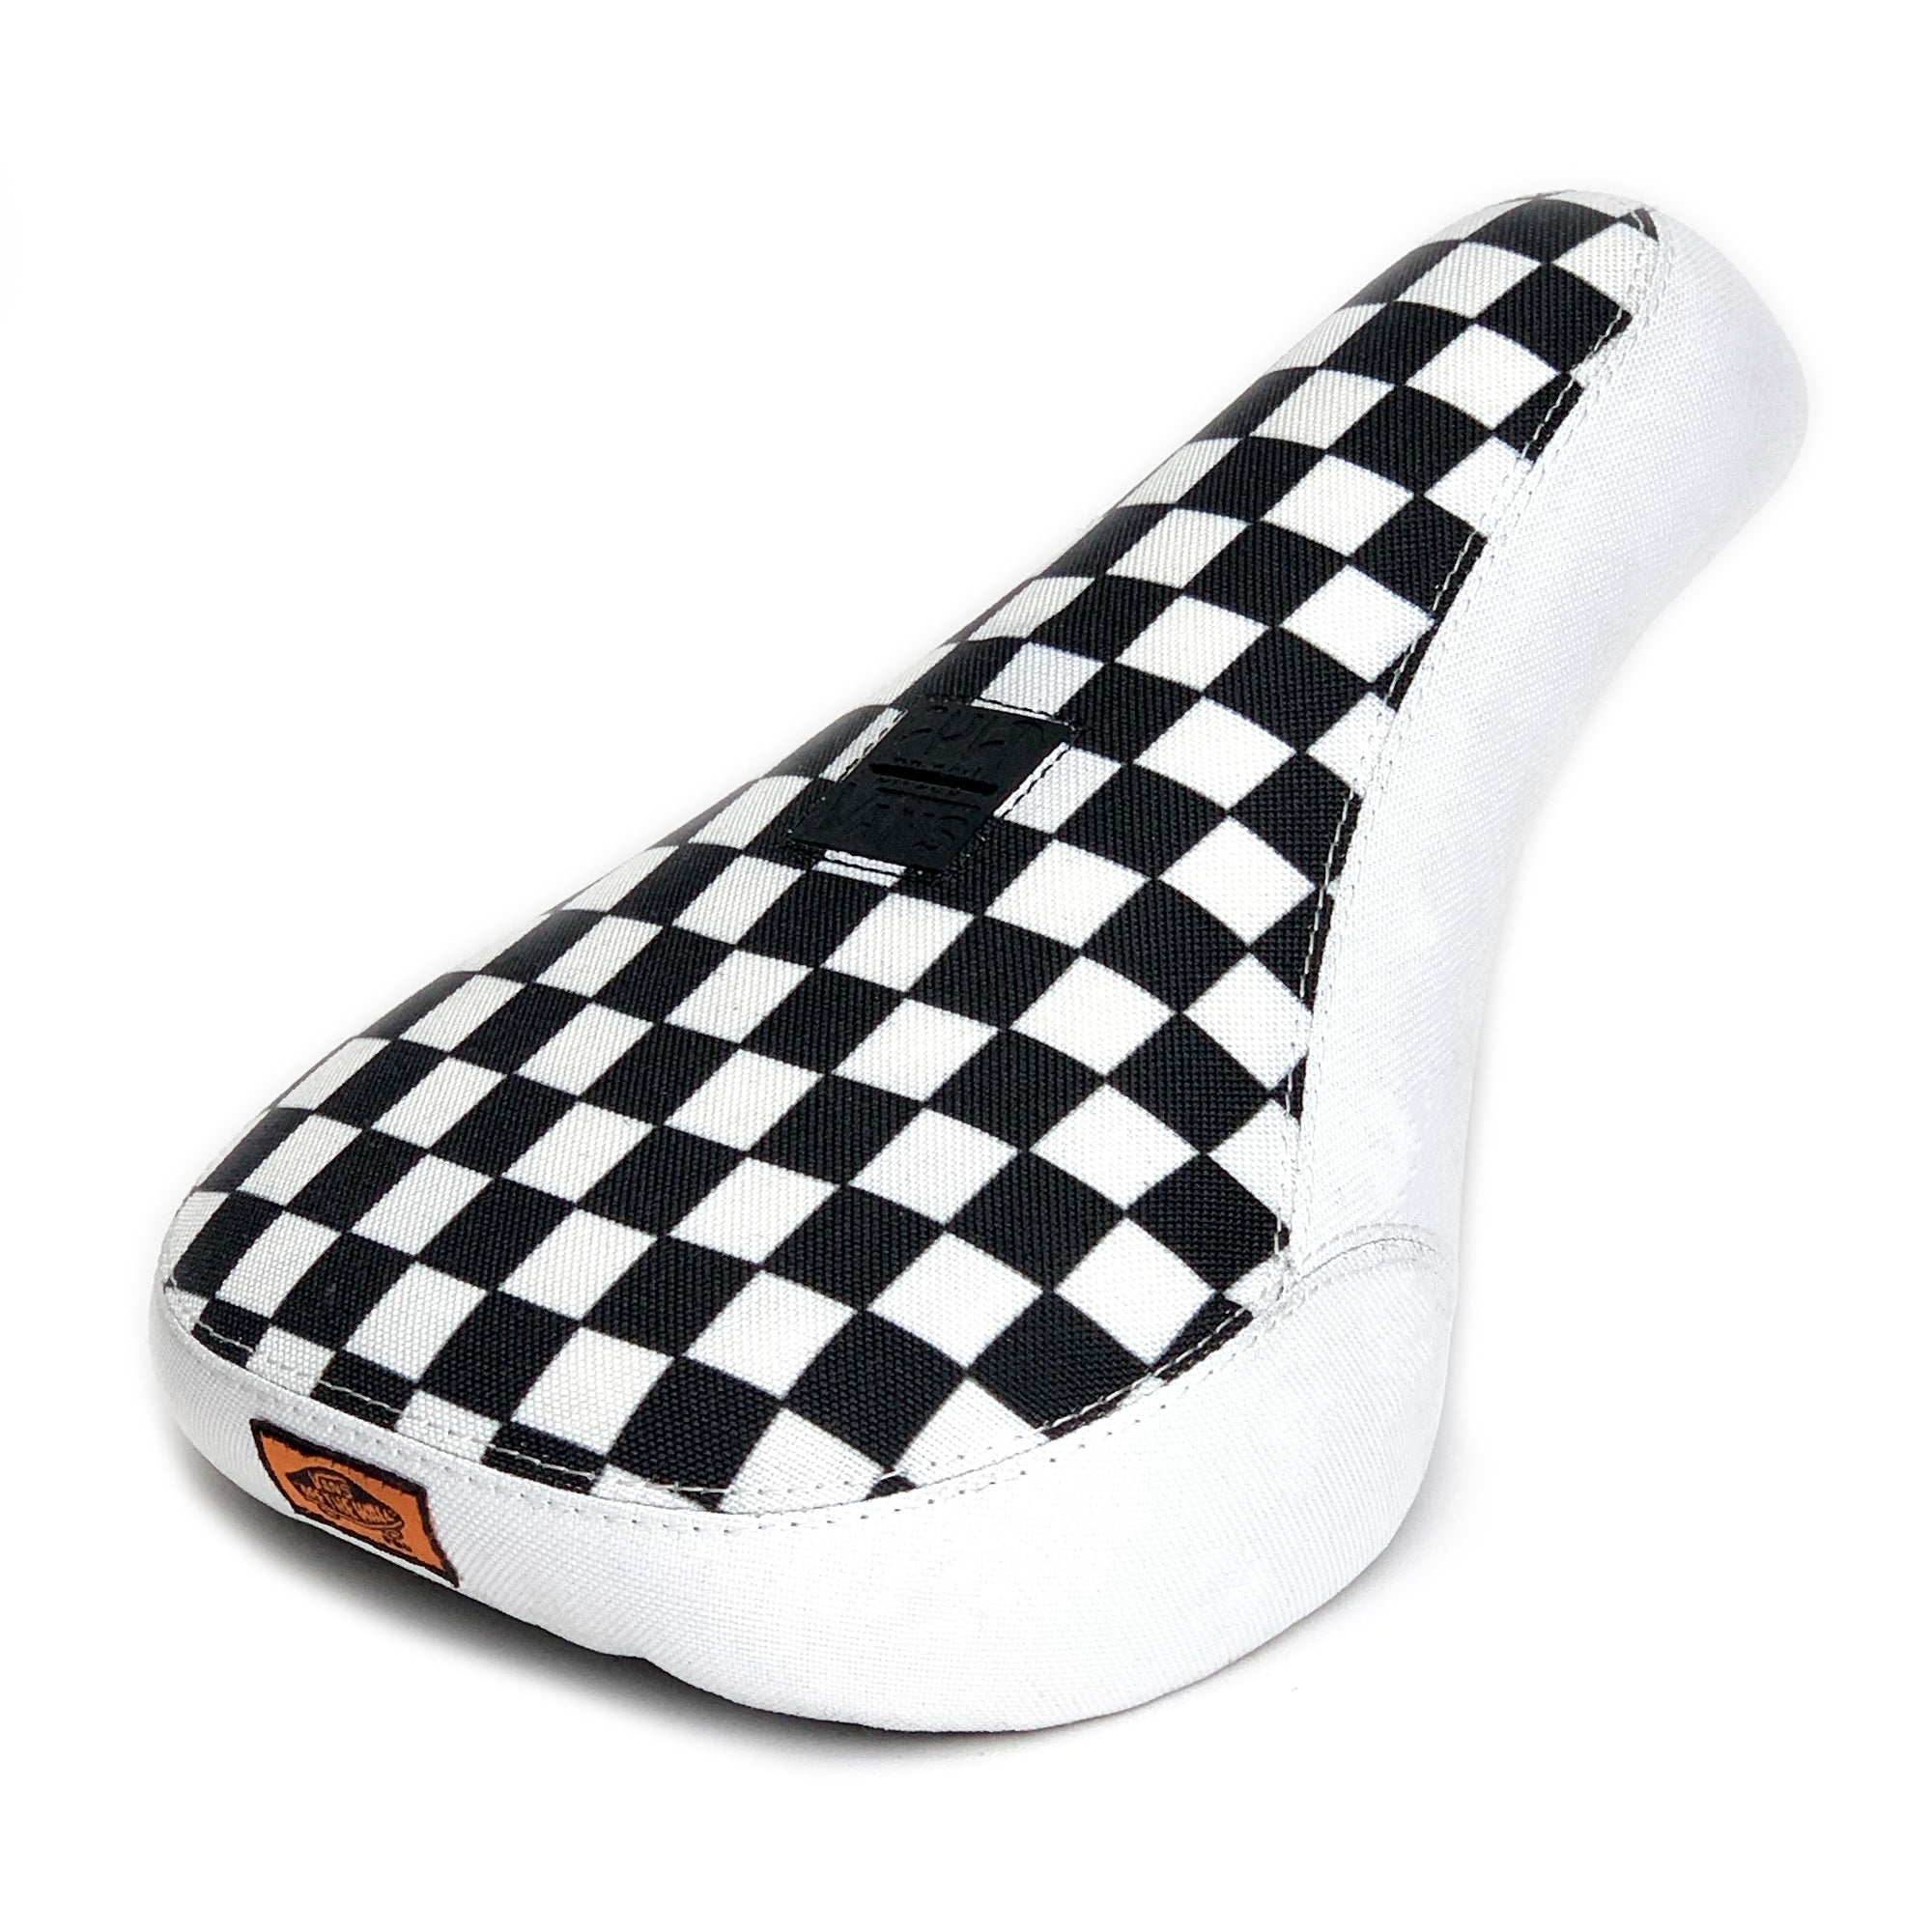 Cult x Vans Slip On Pro Seat / checkered white